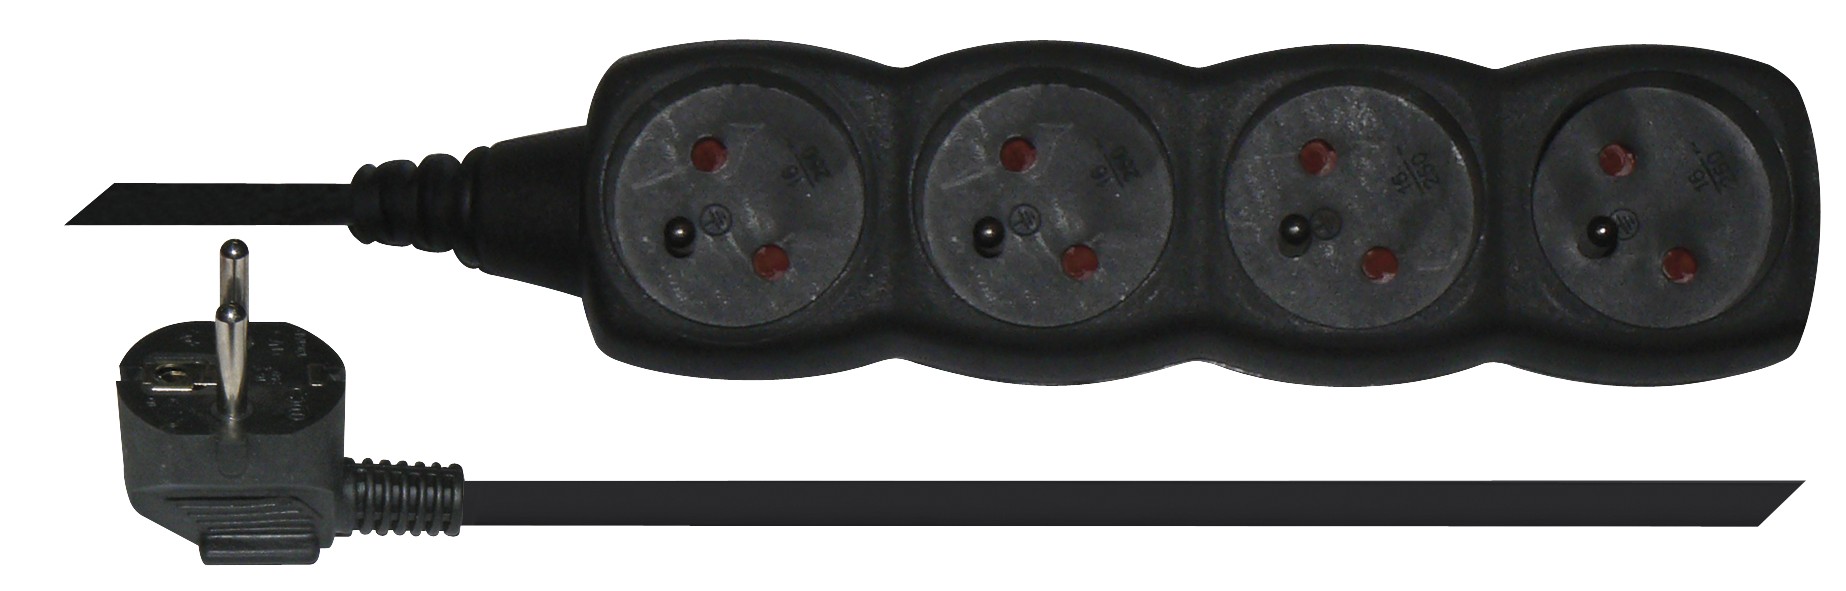 EMOS PC0415 Prodlužovací kabel – 4 zásuvky, 5m, černý